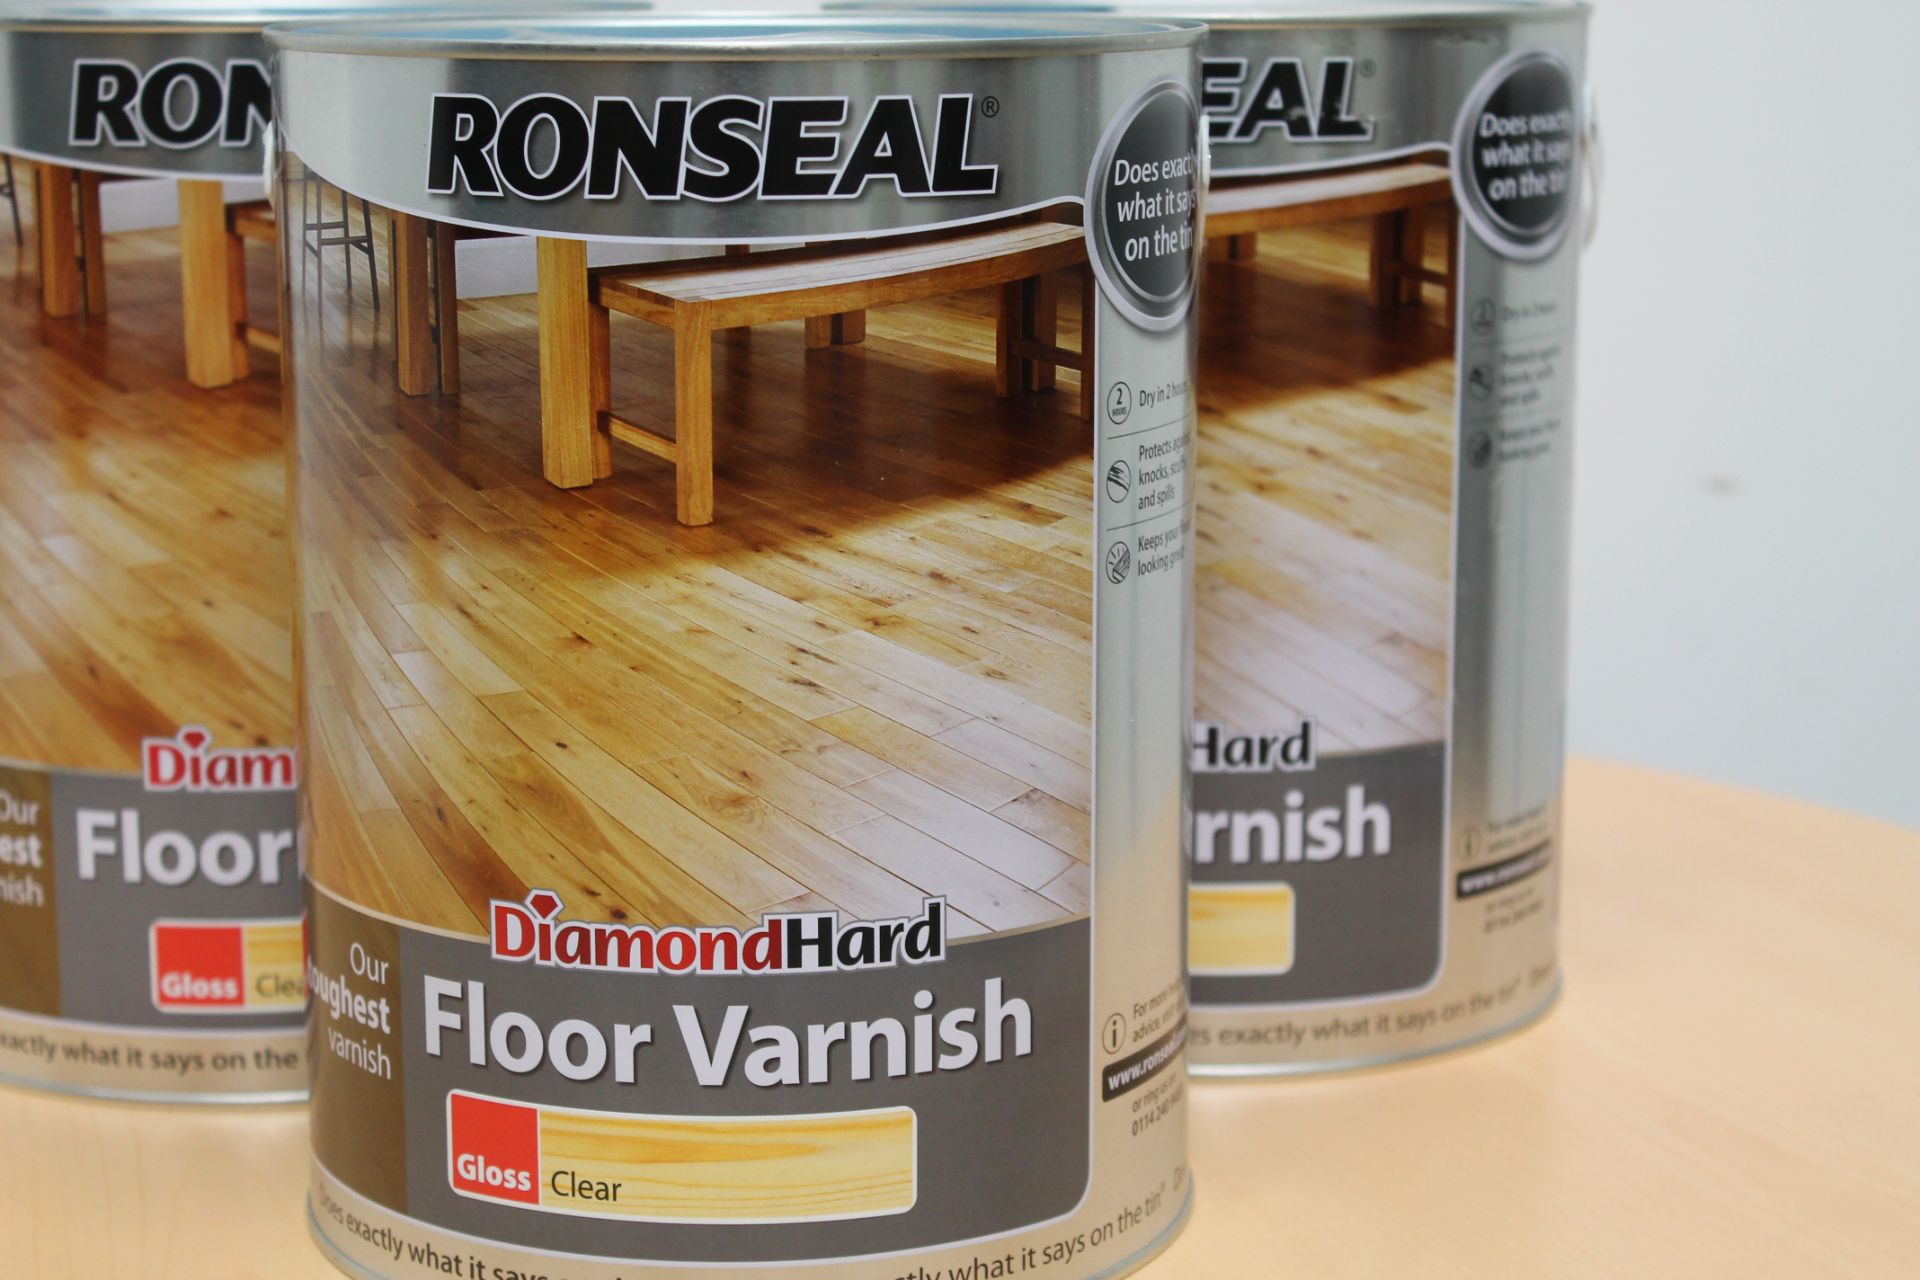 1 x 5L Ronseal Diamond Hard Floor Varnish (Gloss Clear)